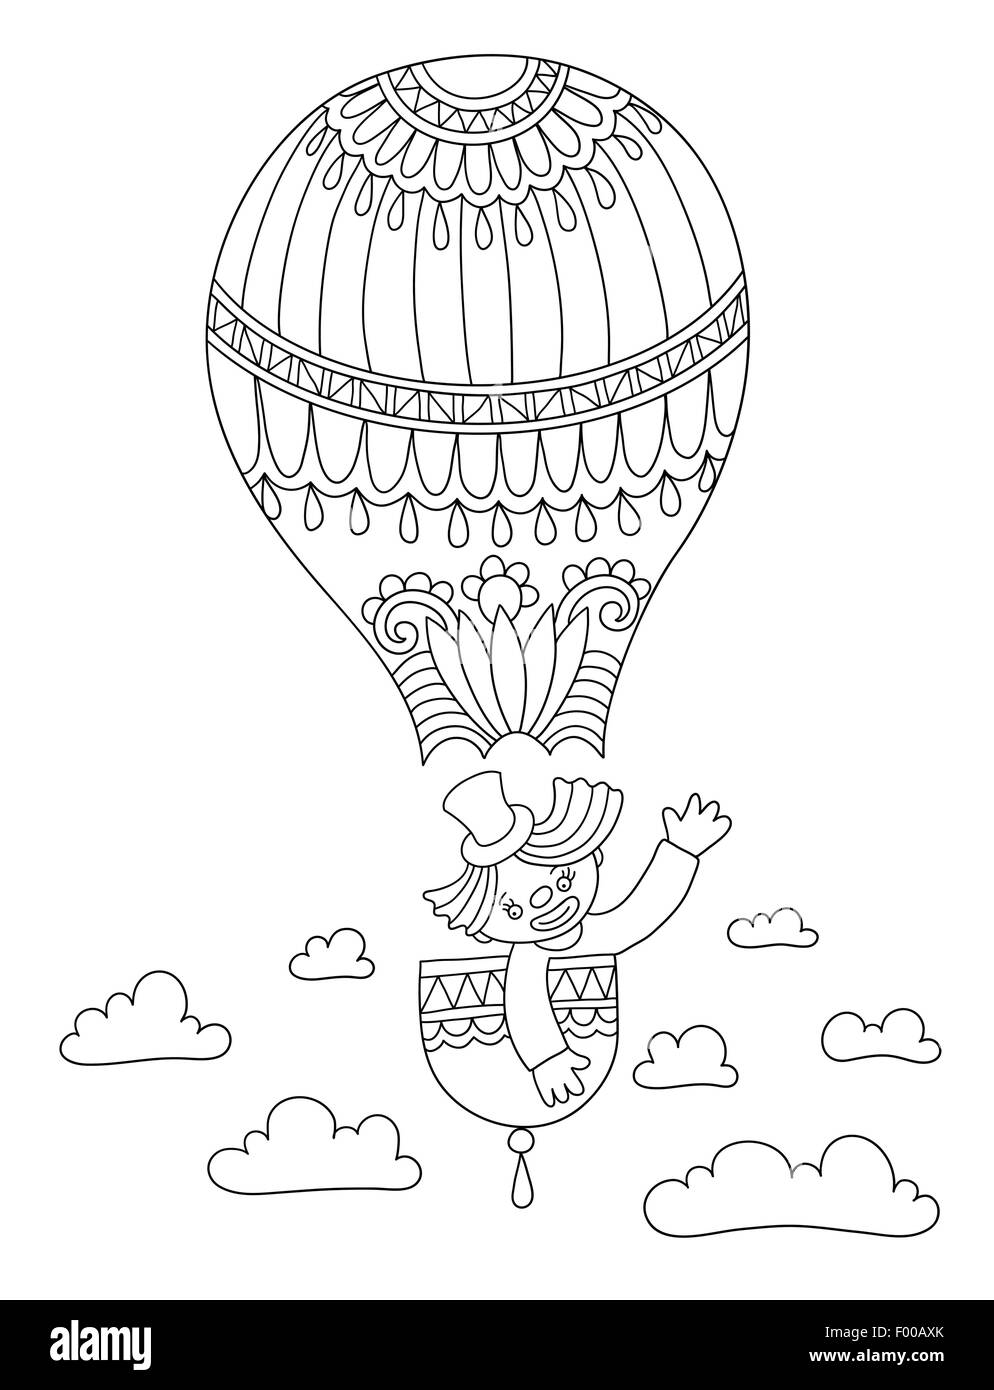 line art illustration of circus theme - clown in a balloon Stock Vector